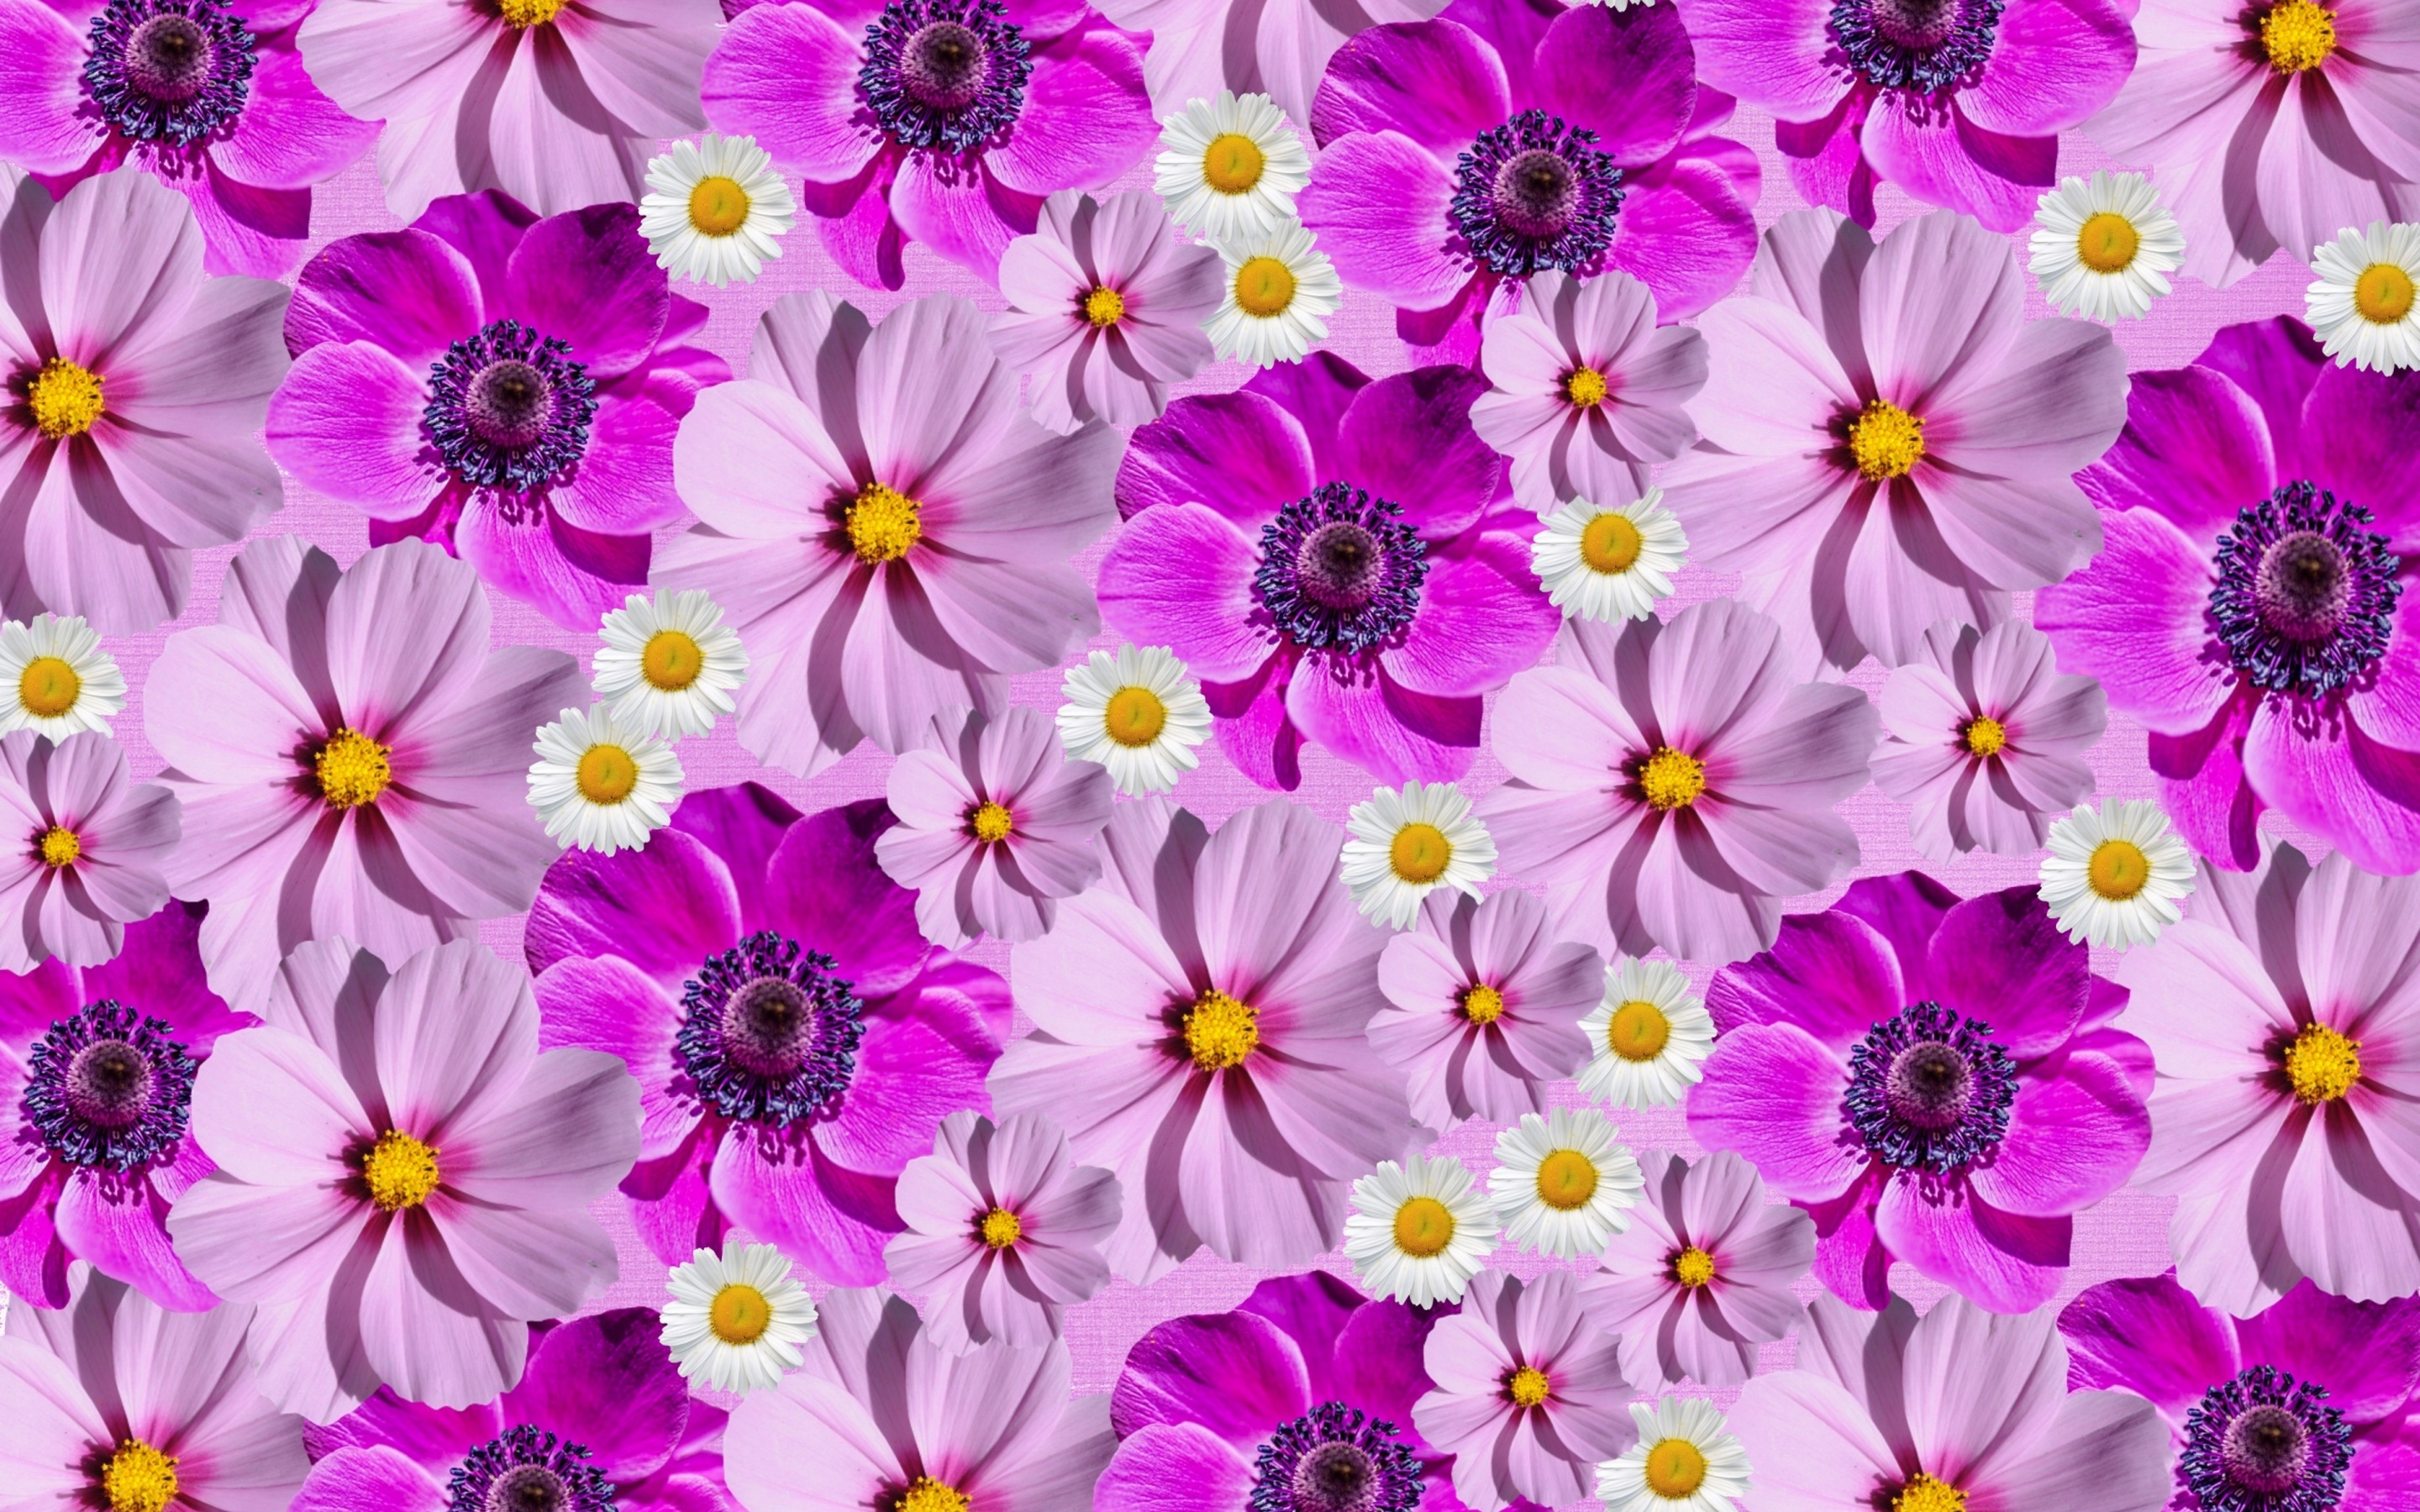 100,000+ Free Spring Flowers & Spring Images - Pixabay